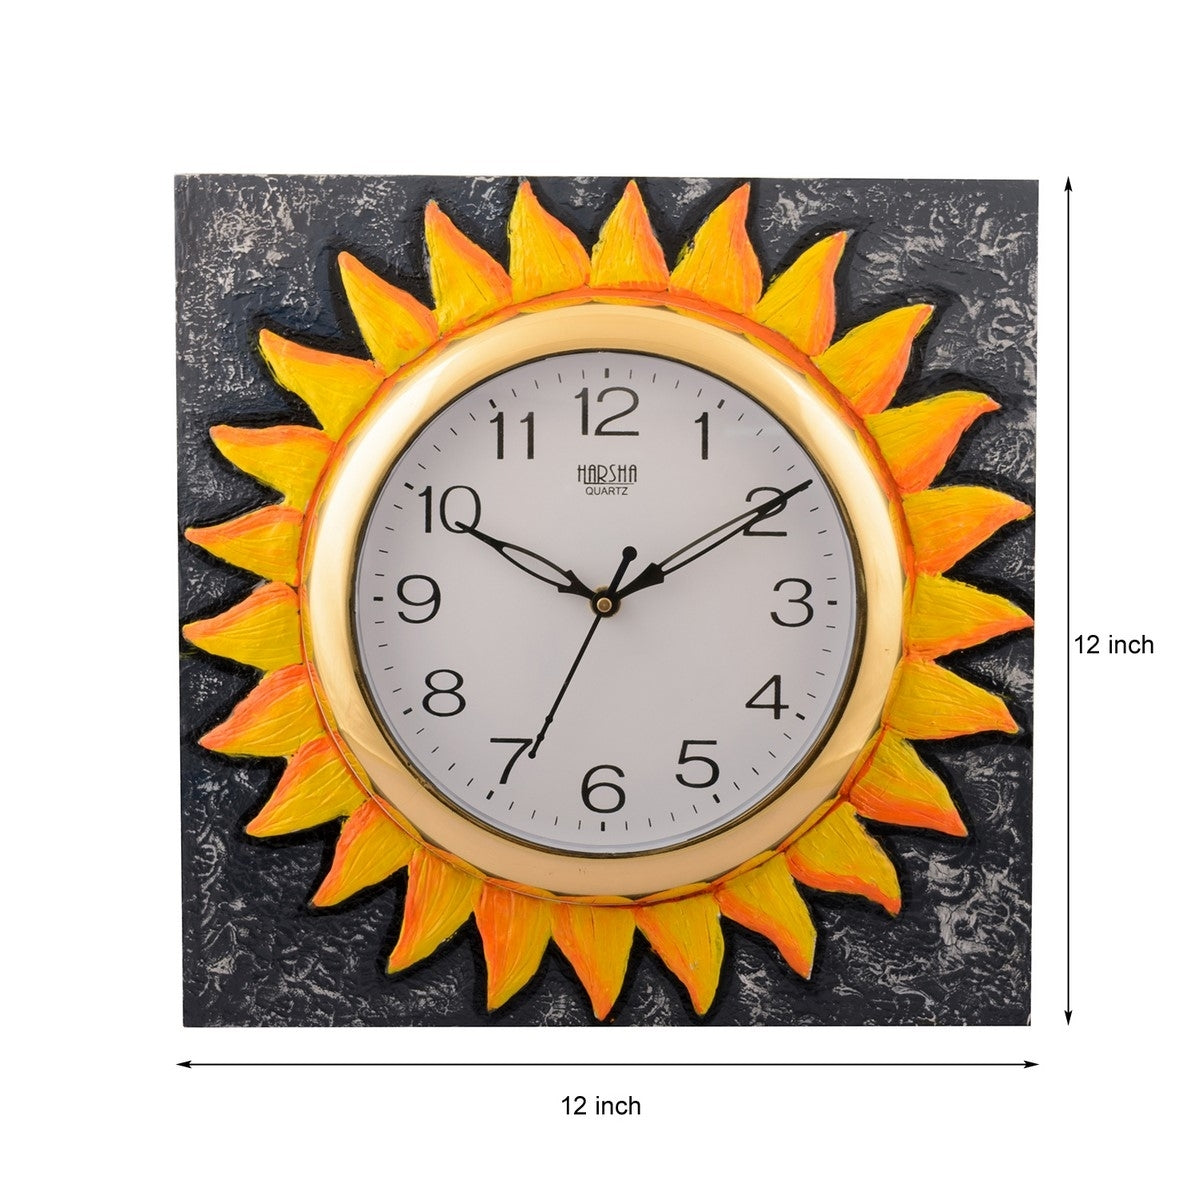 Artistic Handicrafted Square Shape Sun Design Wooden Wall Clock 2